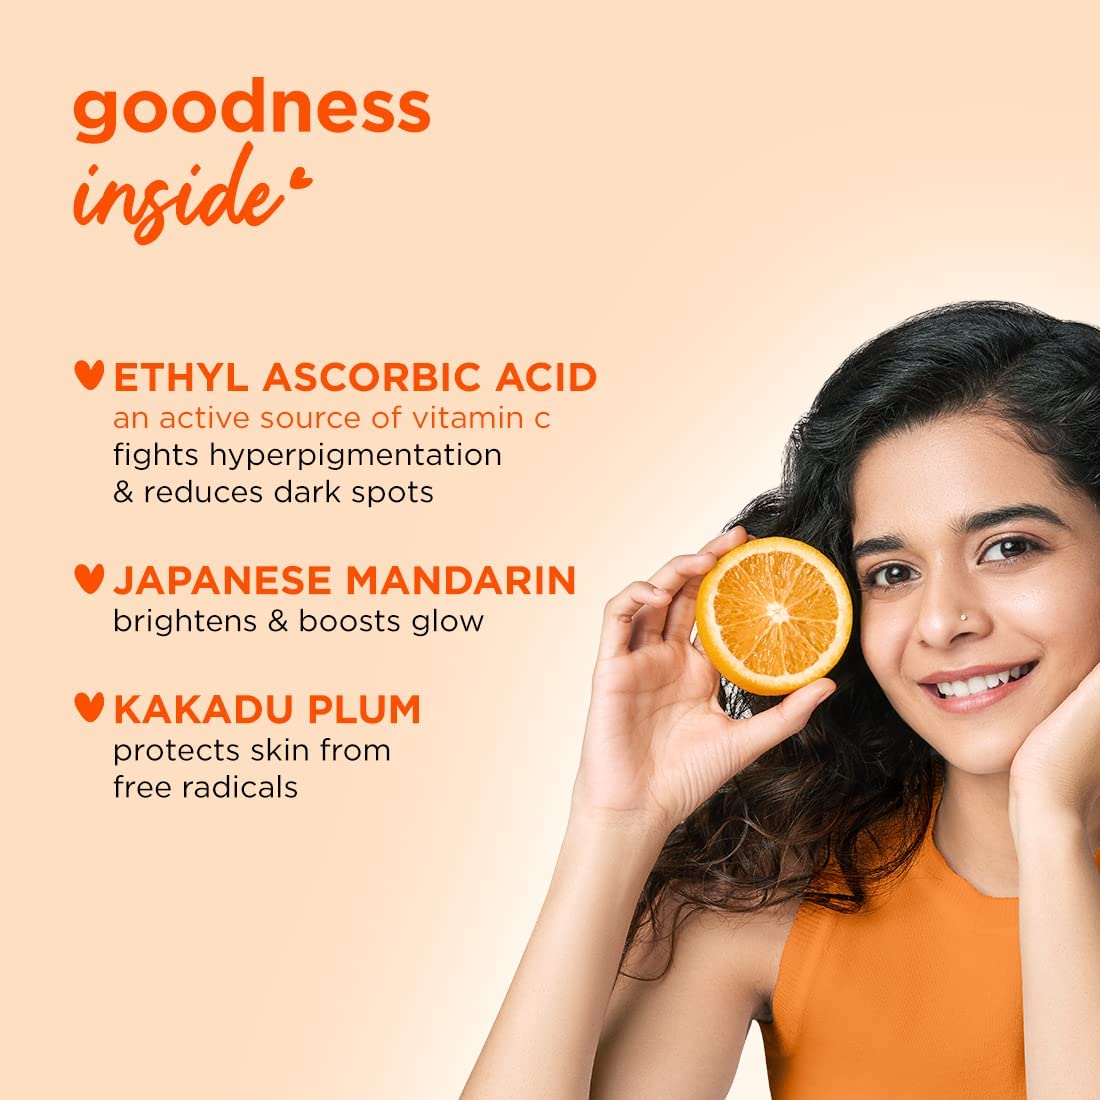 Plum 15% Vitamin C Face Serum with Mandarin for All Skin Type with Pure Ethyl Ascorbic Acid for Hyperpigmentation & Dull Skin, Fragrance-Free, 0.67 Fl Oz